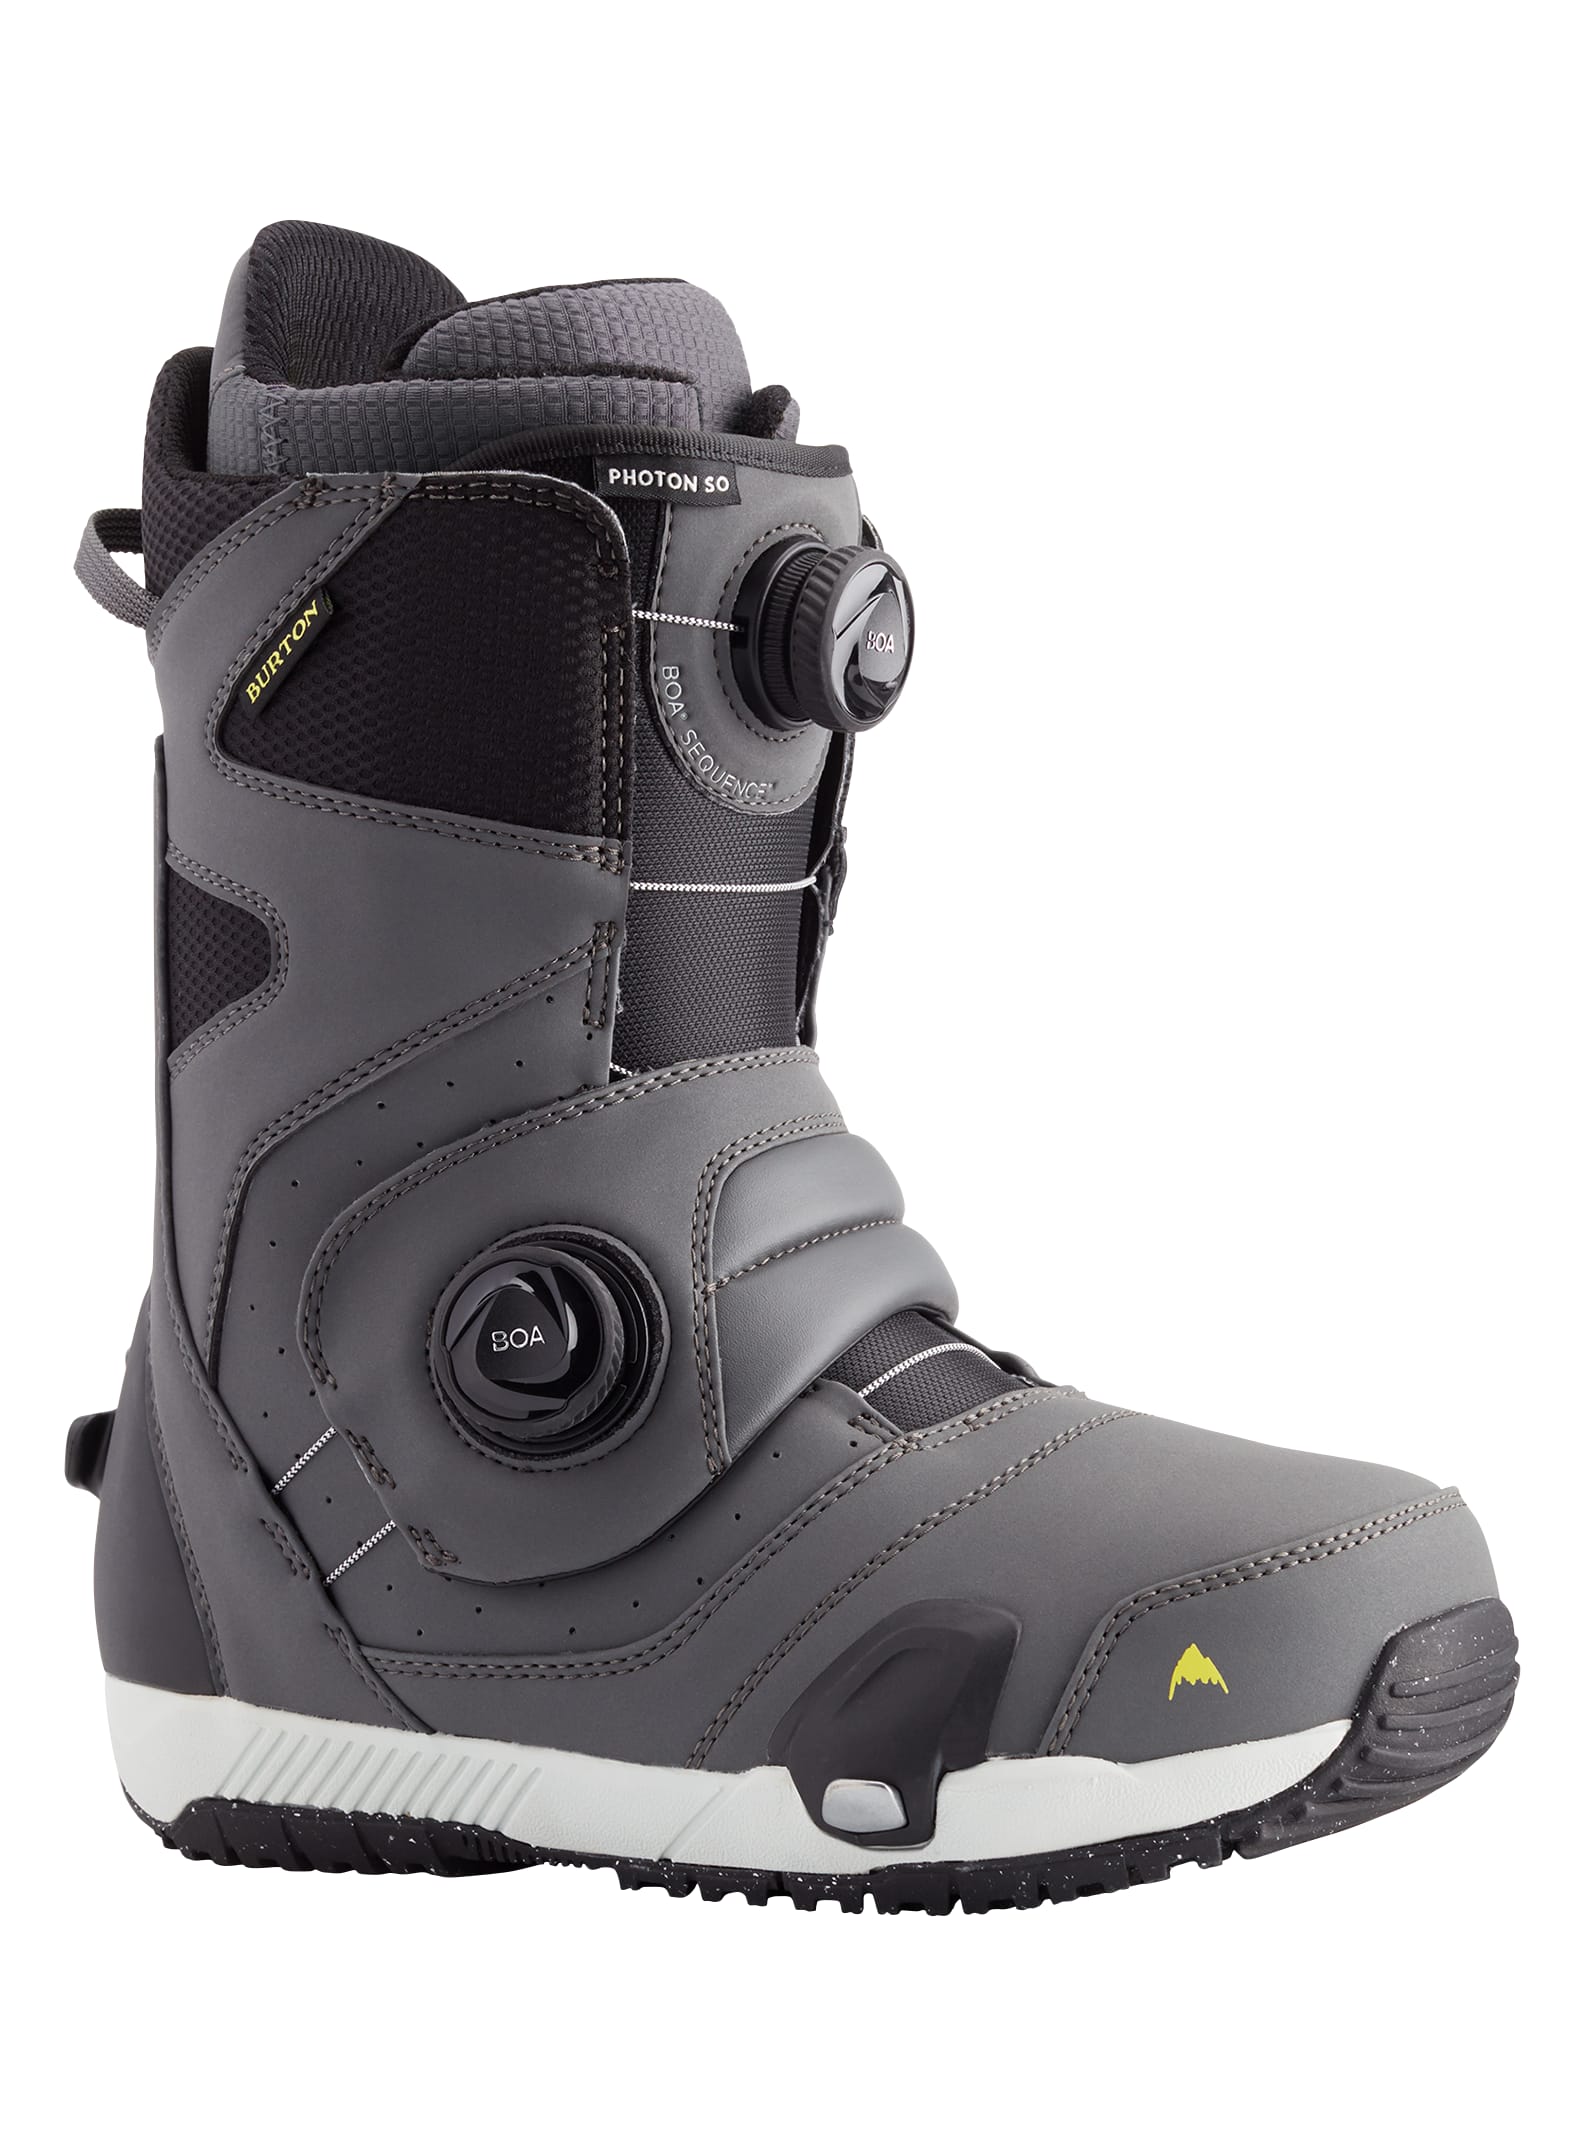 Step On® Boots & Bindings | Burton Snowboards US